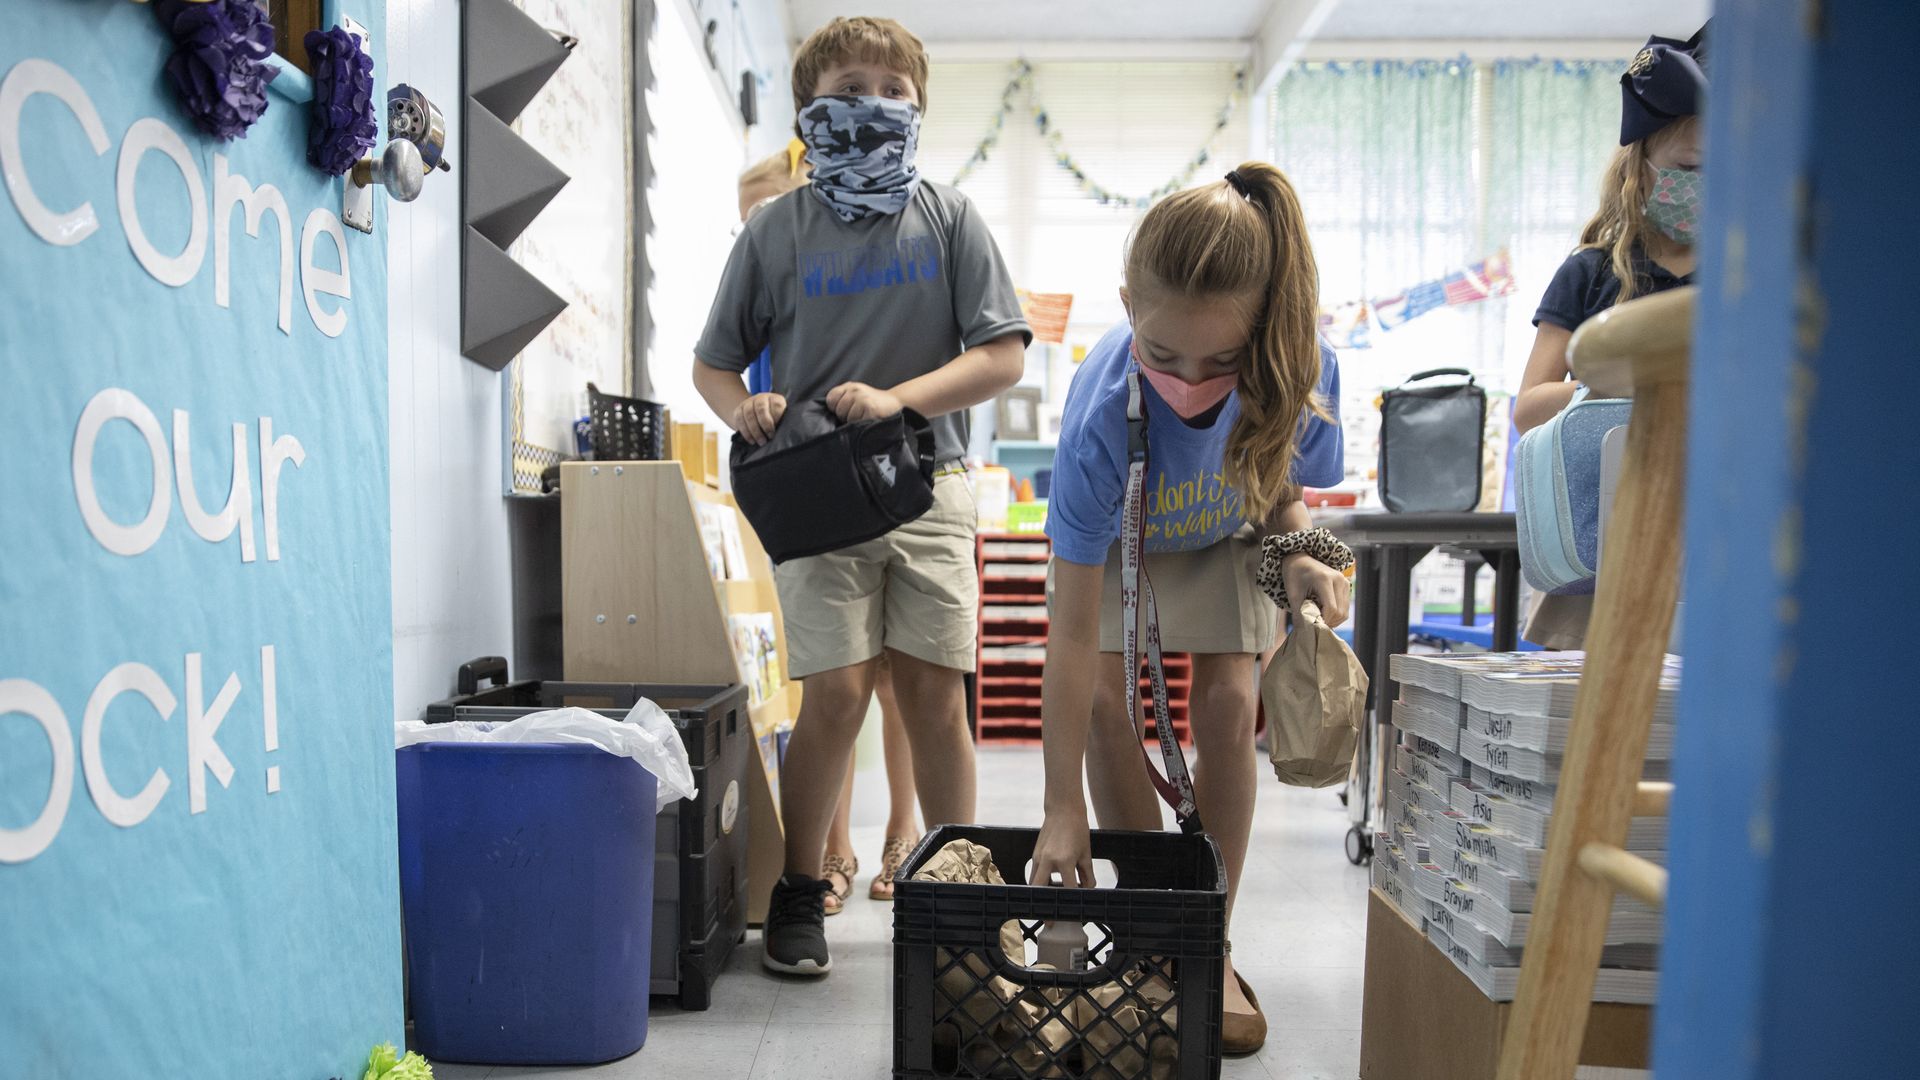 Children retrieve bagged lunches in their classroom